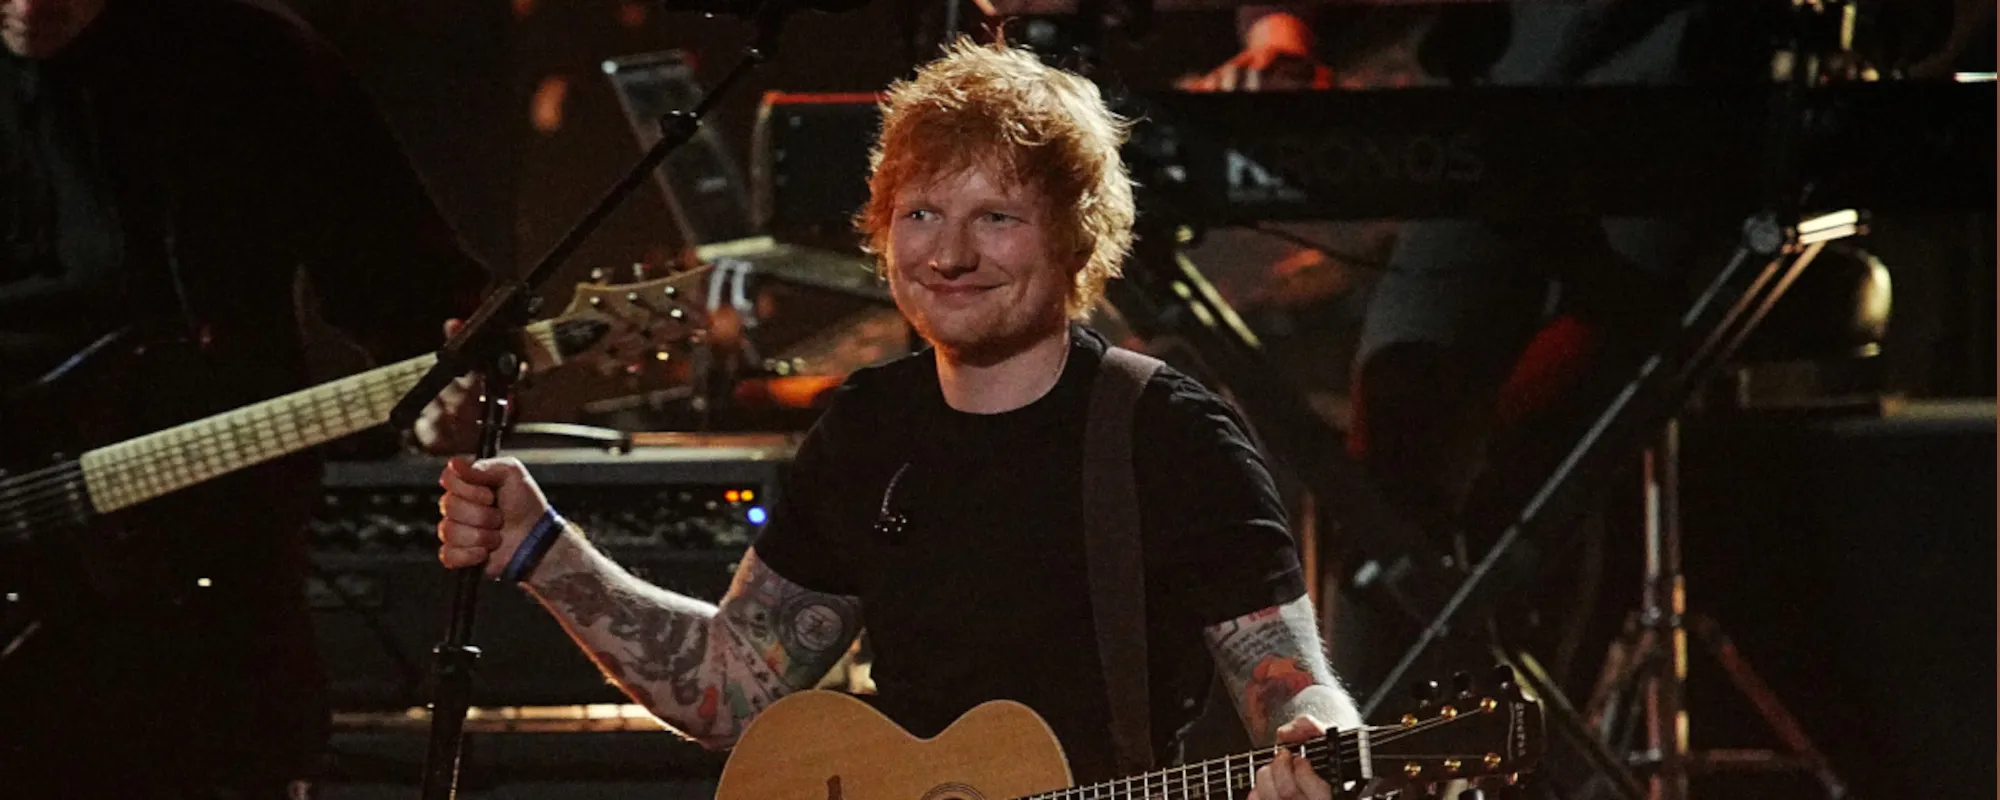 Ed Sheeran Breaks Personal Record on ‘Mathematics’ Stadium Tour